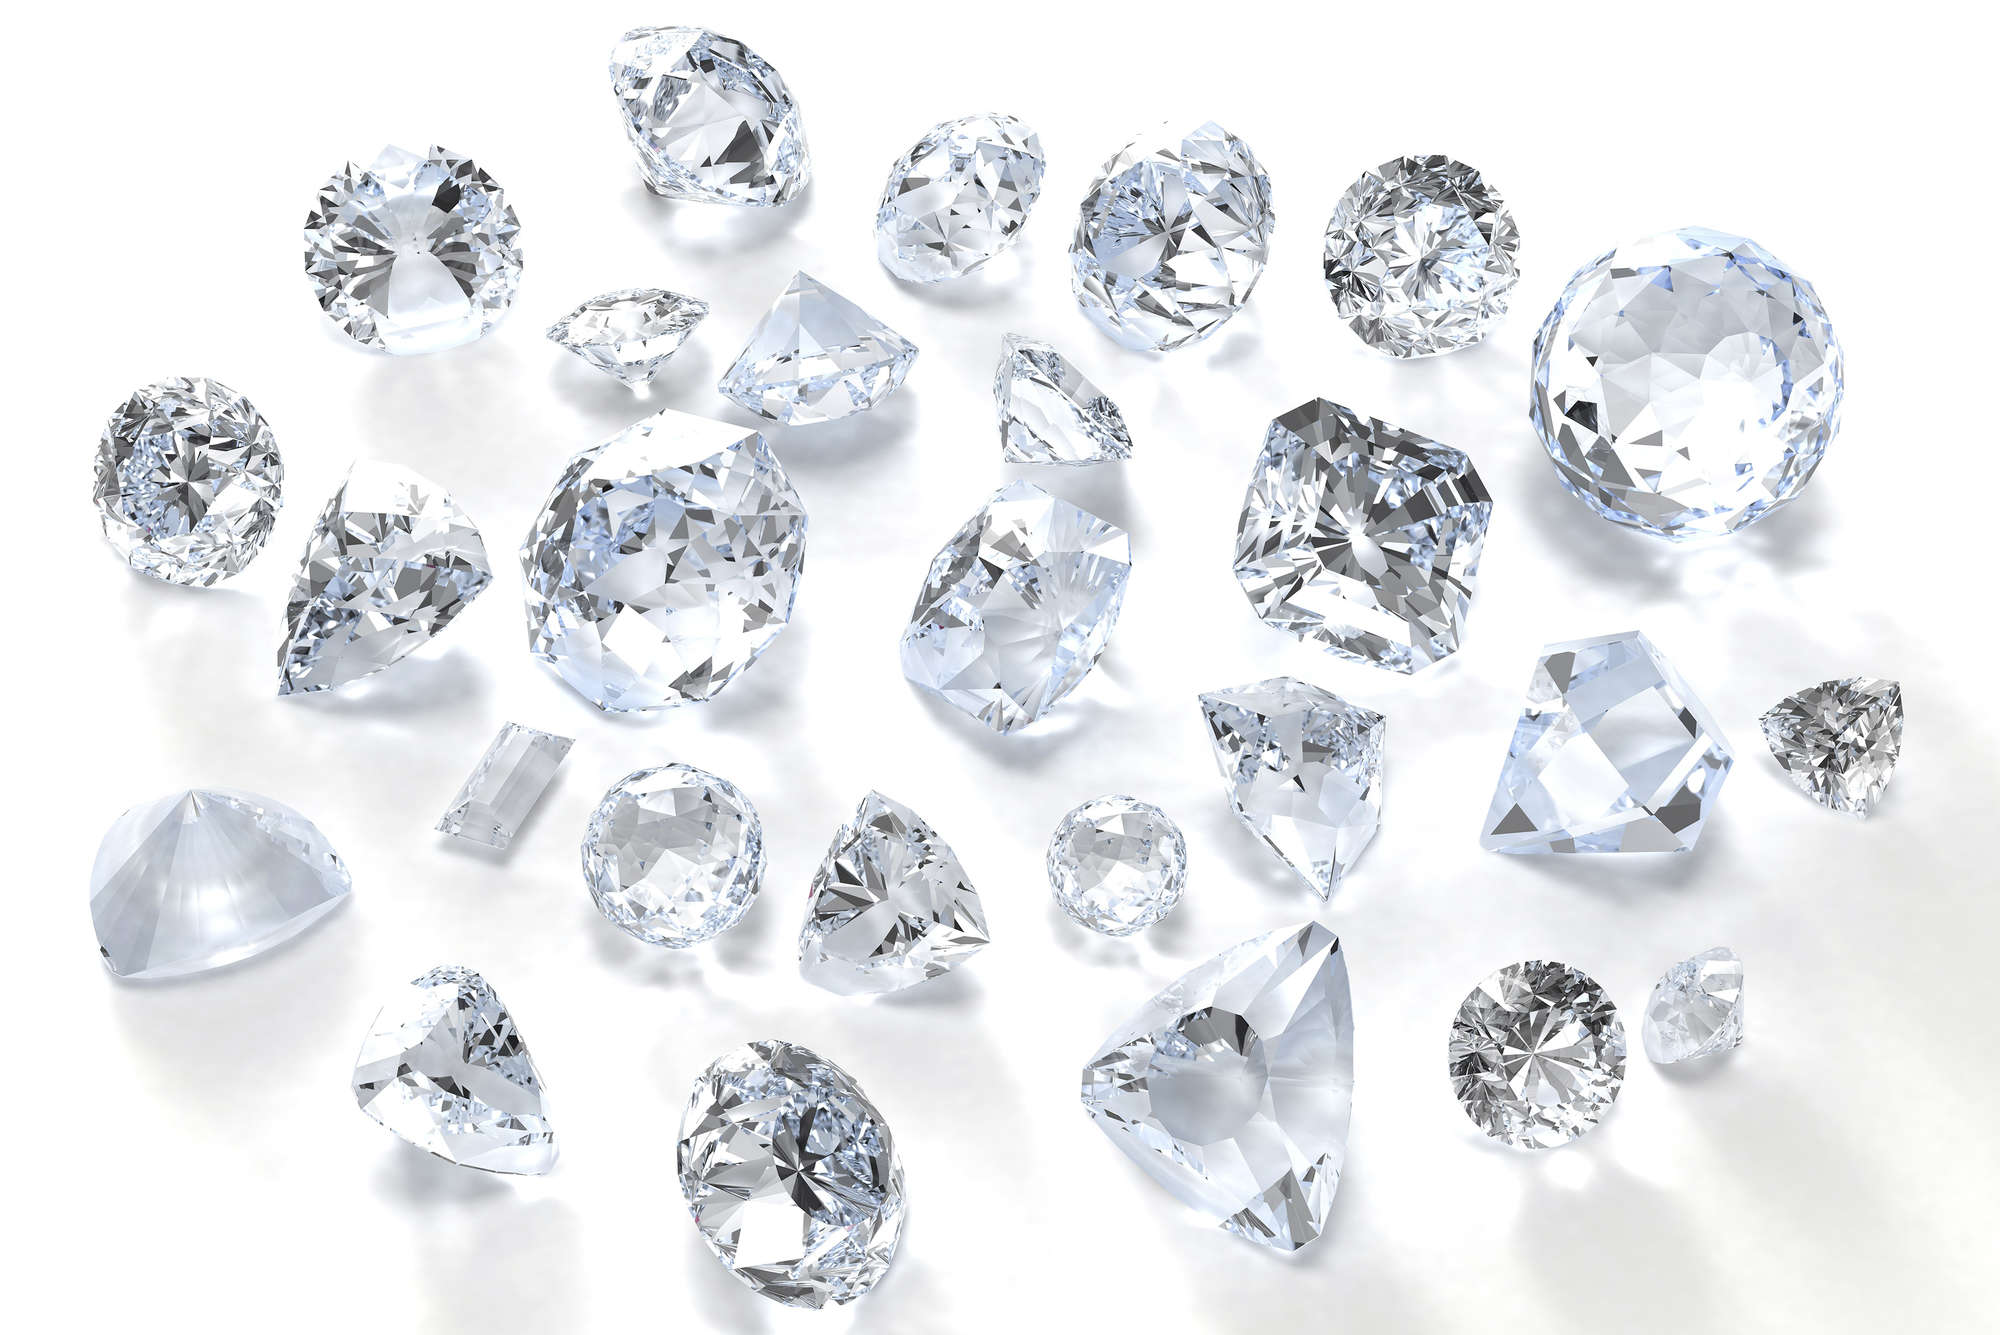             Fototapete geschliffene Diamanten – Premium Glattvlies
        